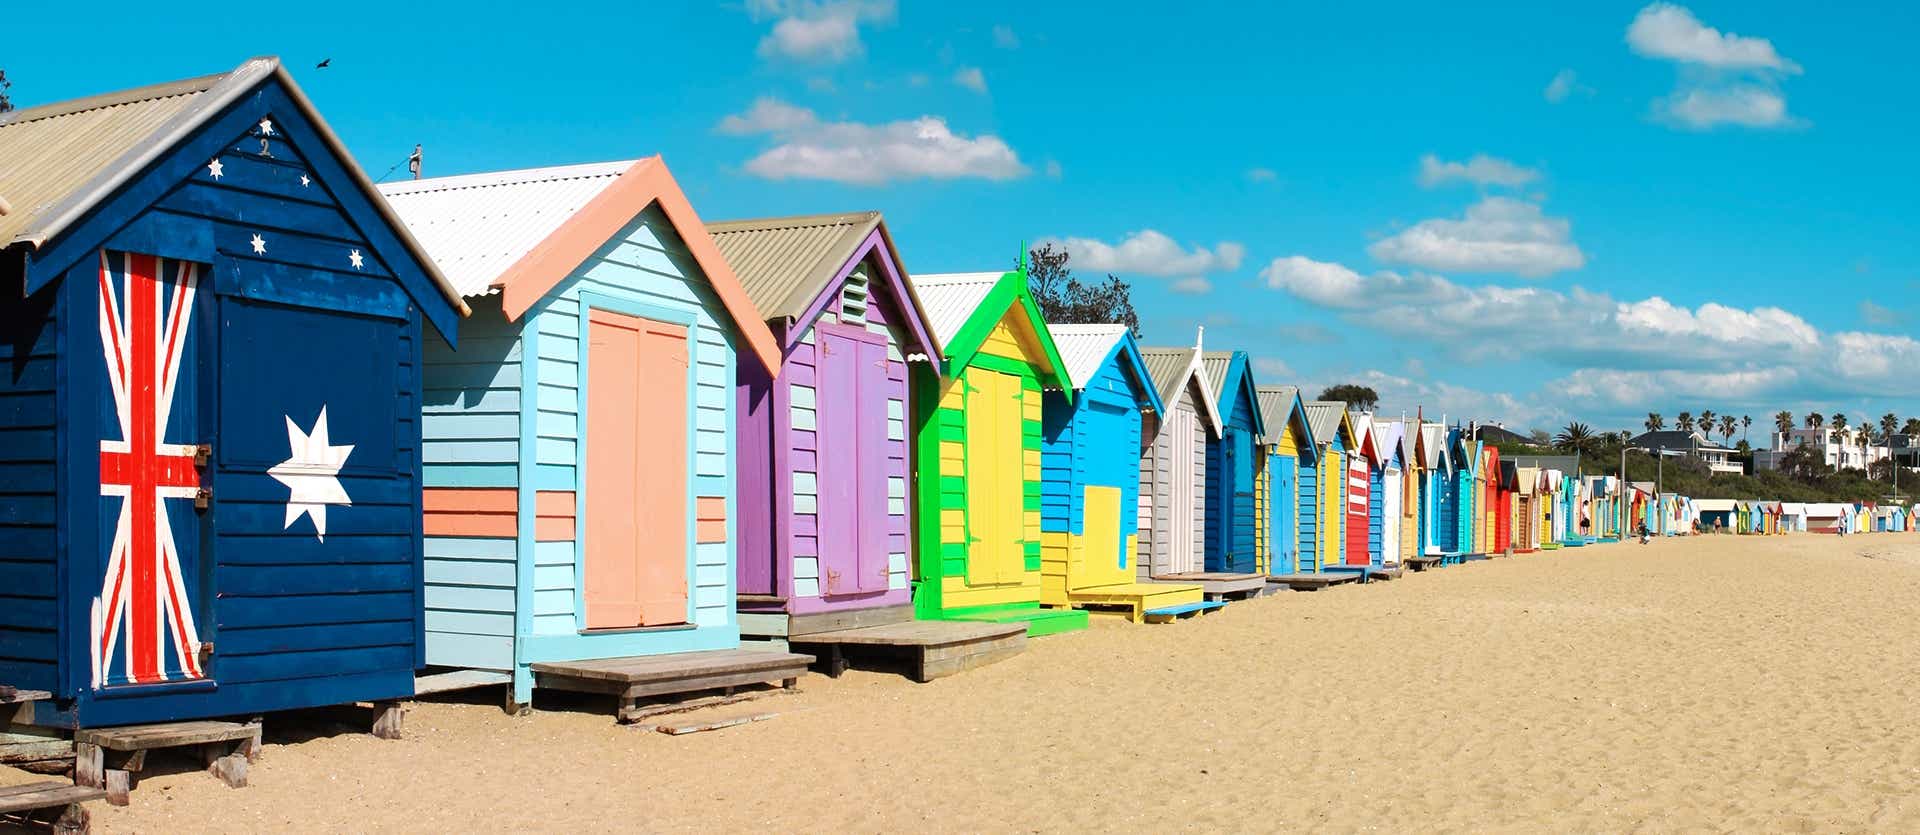 Colorful Beach Huts <span class="iconos separador"></span> Brighton Beach <span class="iconos separador"></span> Melbourne 